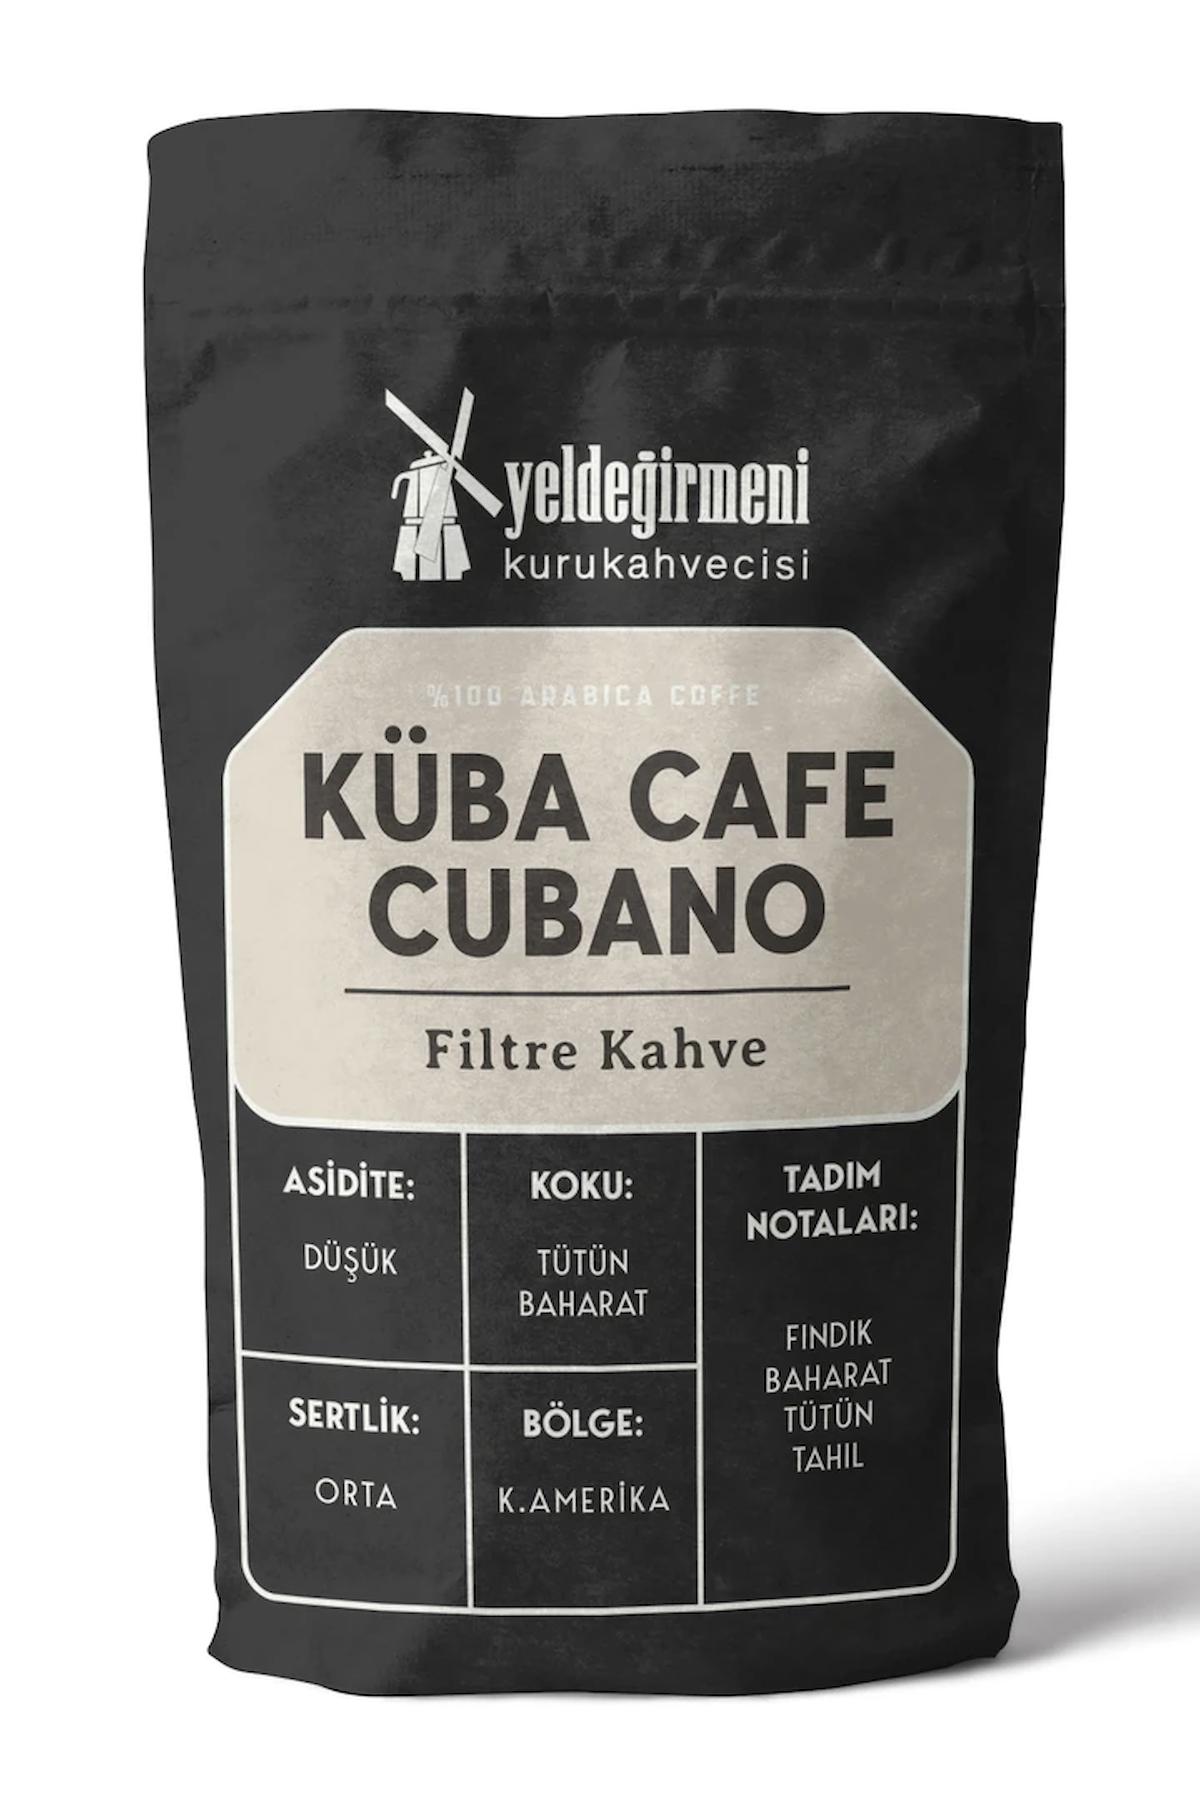 Yeldeğirmeni Kurukahvecisi Küba Cafe Cubano Filtre Kahve 1 kg